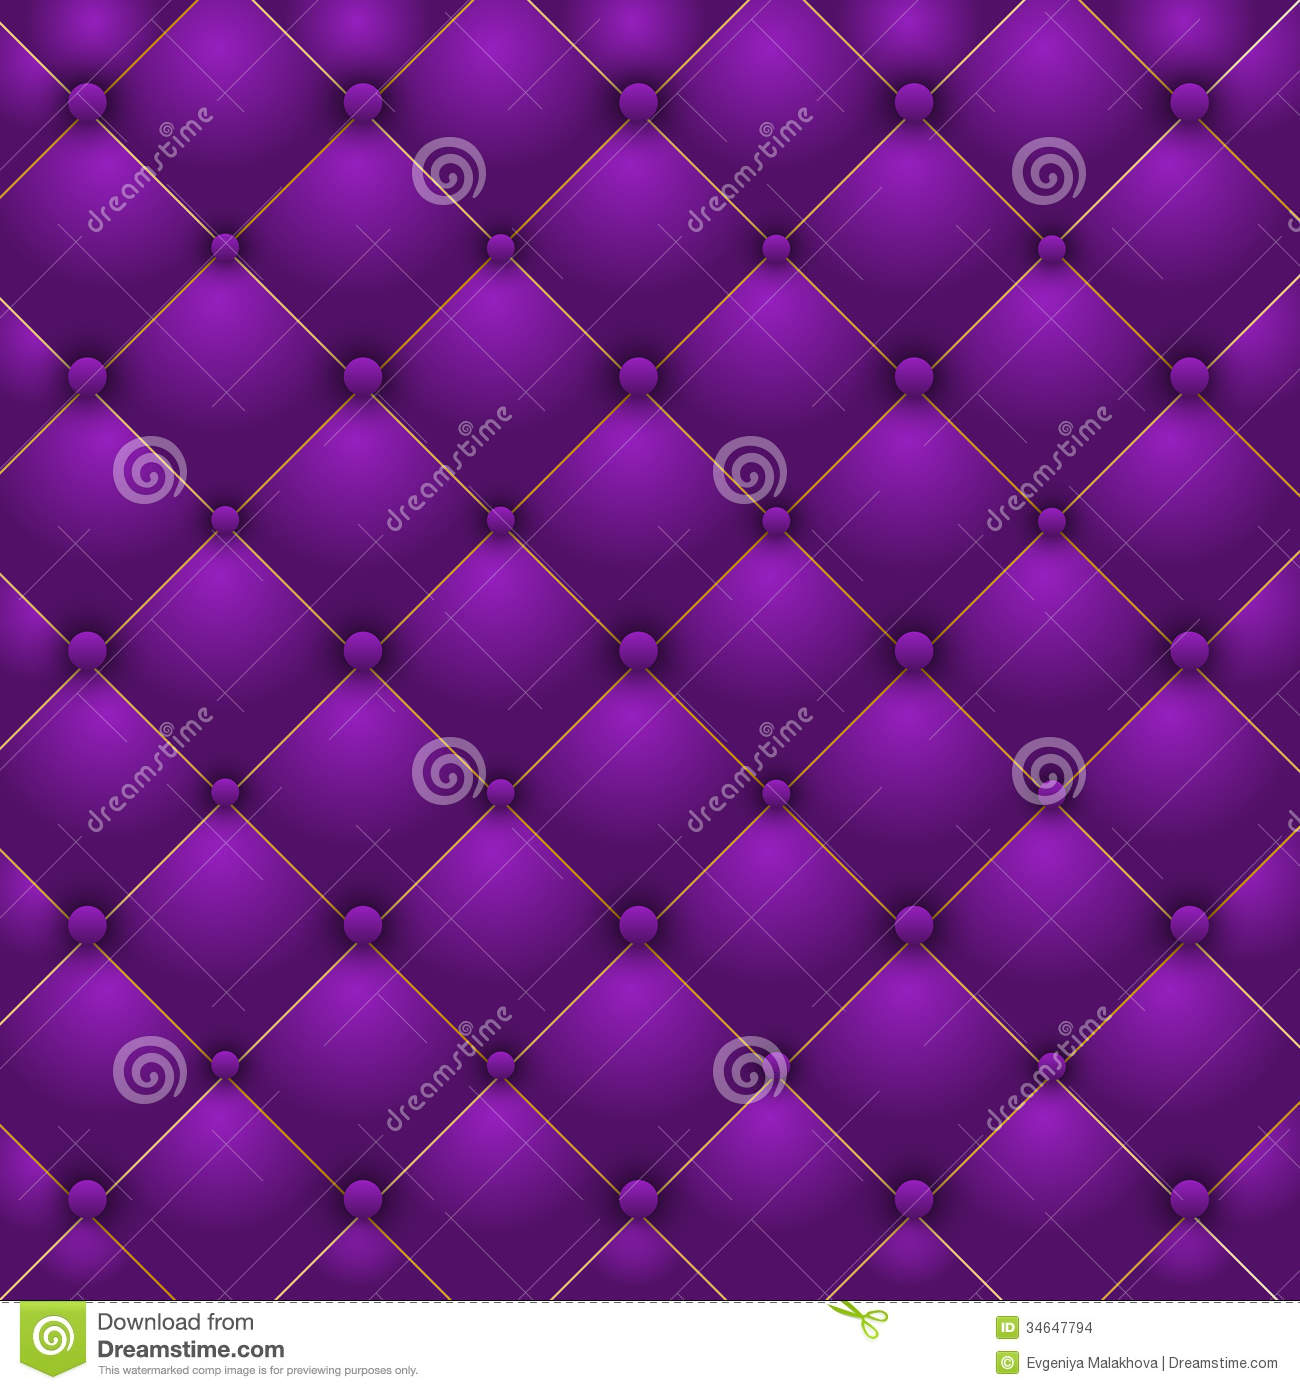 Related Pretty Dark Purple Background